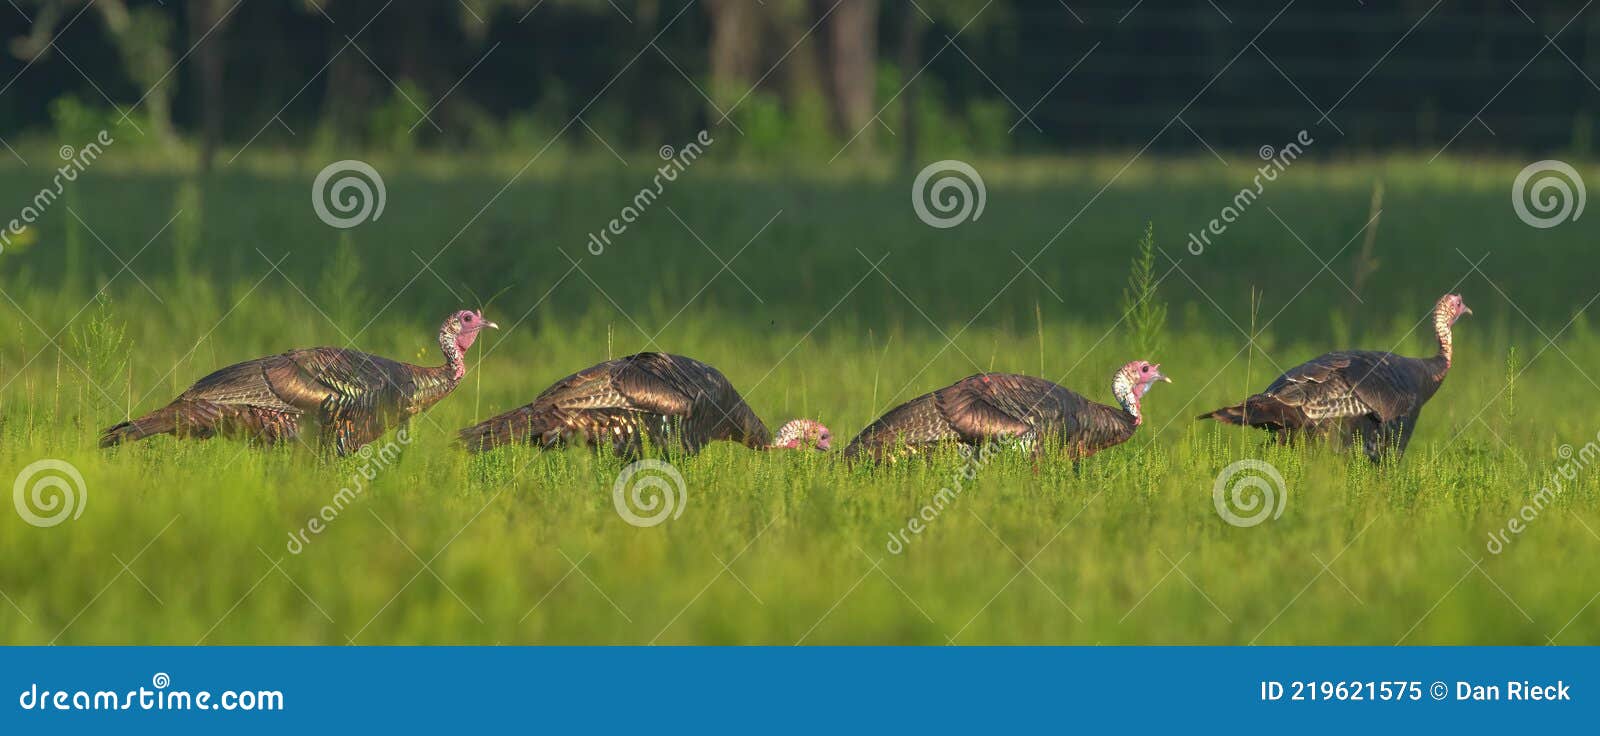 rafter, gobble or flock of young osceola wild turkey meleagris gallopavo osceola